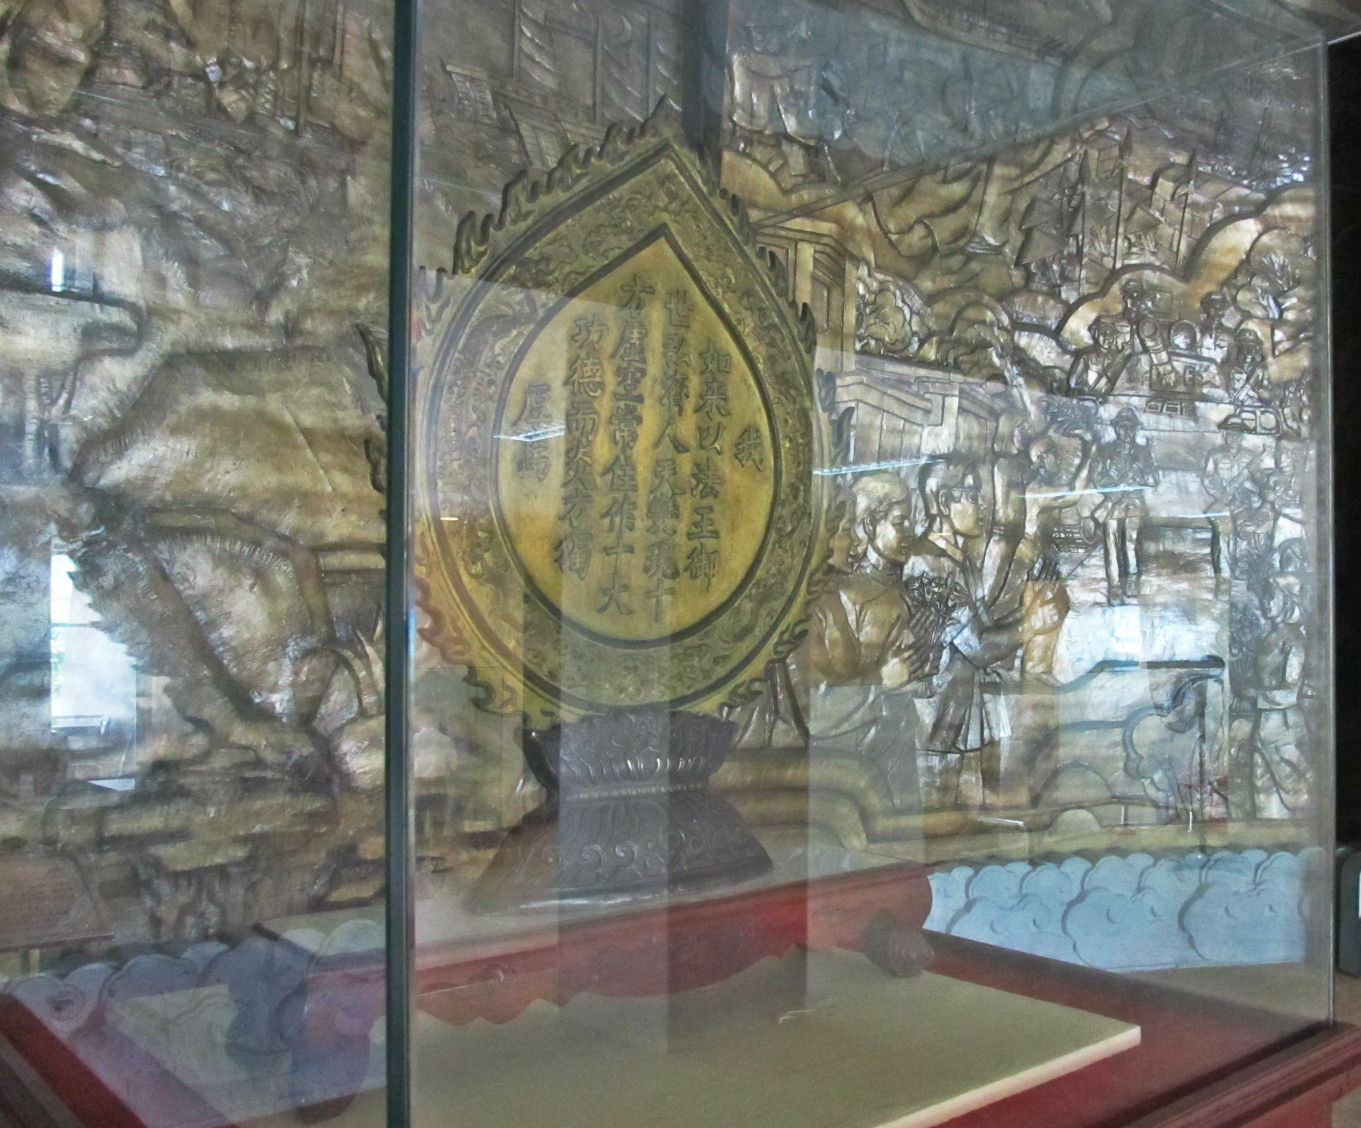 Buddhist antiques on display in Da Nang